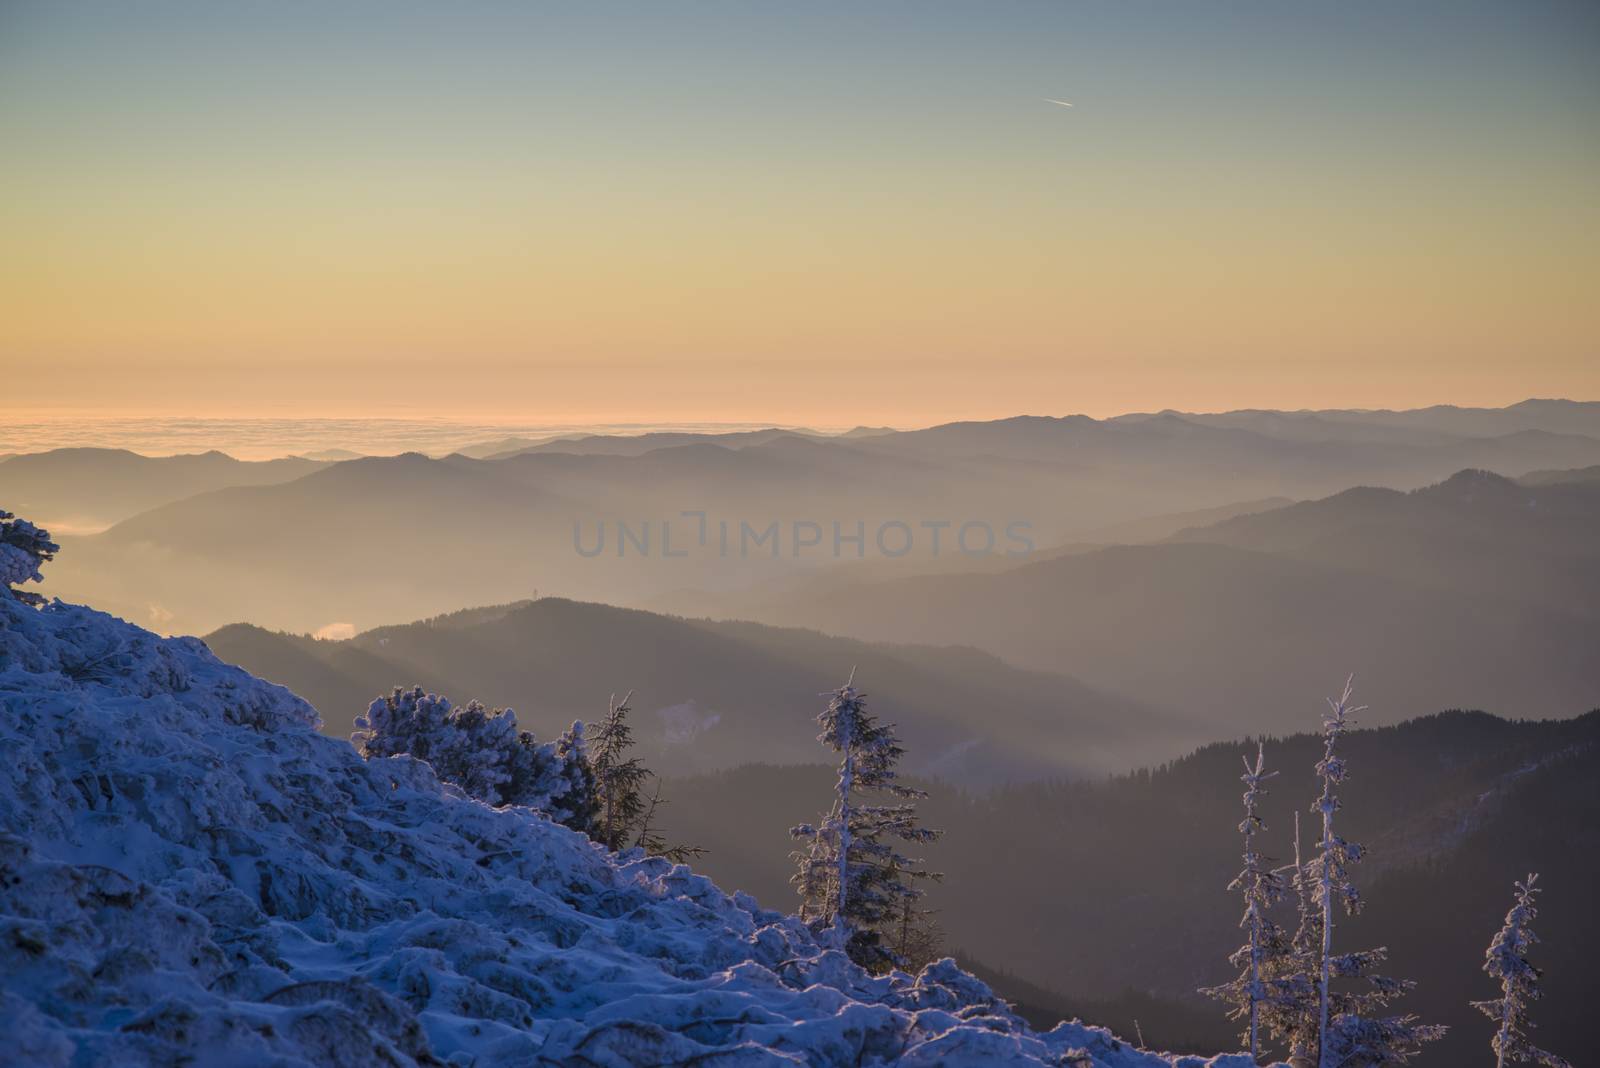 Mountain sunrise scene in winter by savcoco